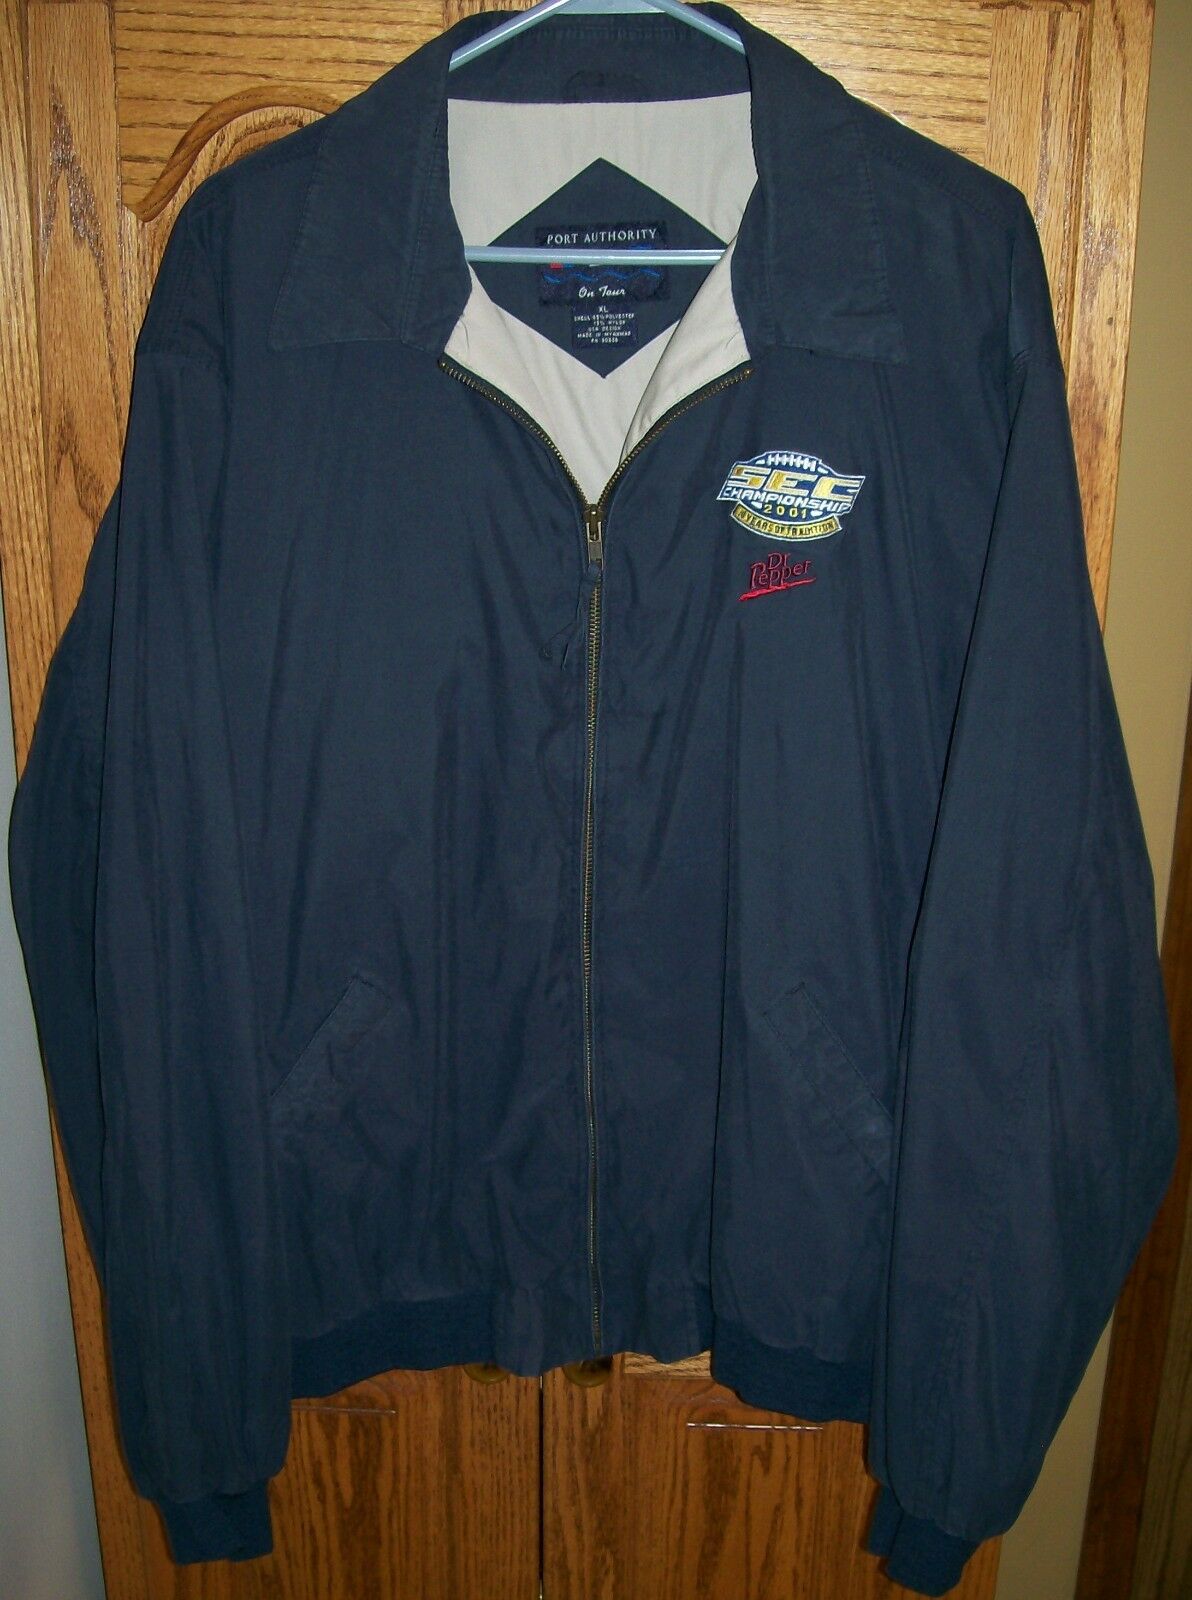 Dr Pepper 2001 Sec Championship Jacket Sz Xl Navy Blue Port Authority Coat Nice!